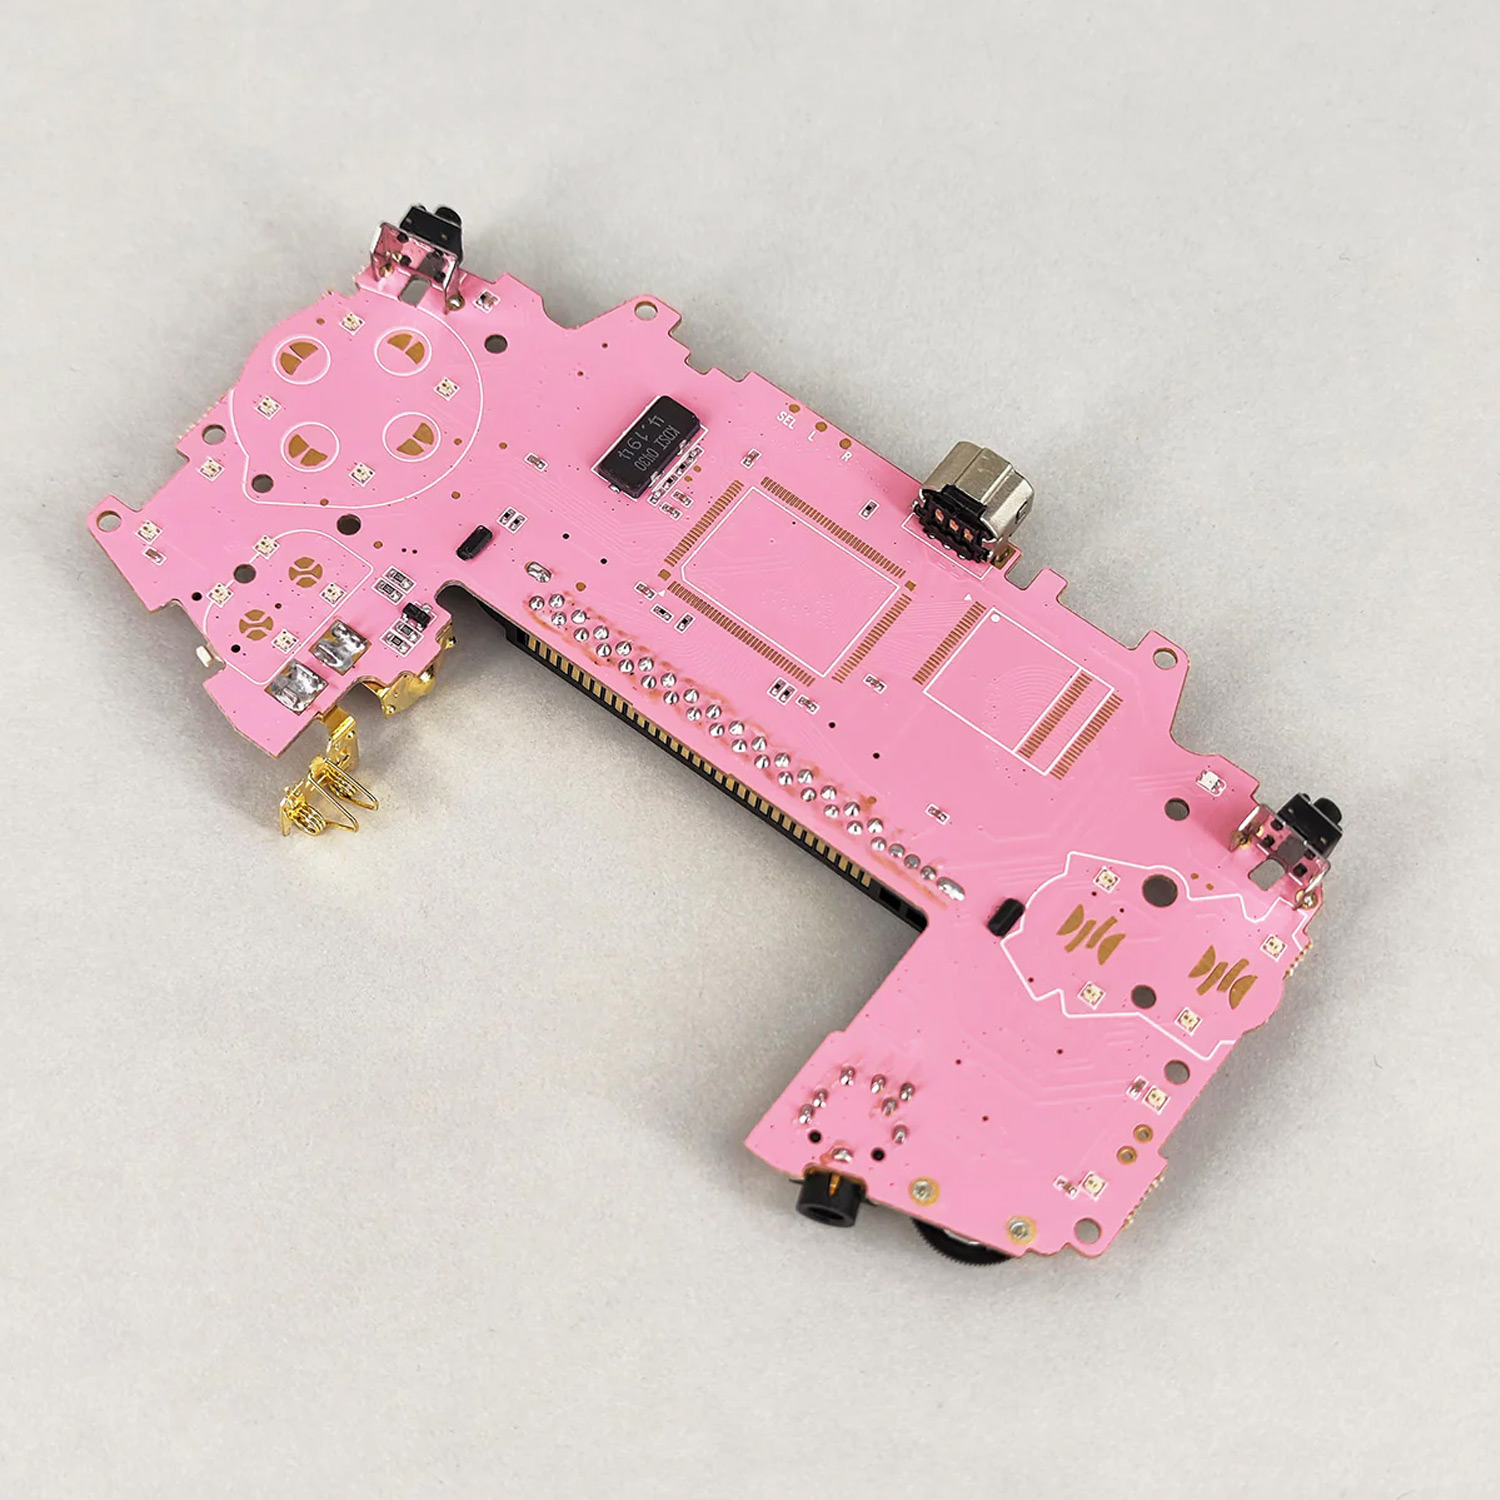 Game Boy Advance Custom LED Mainboard (Pink)